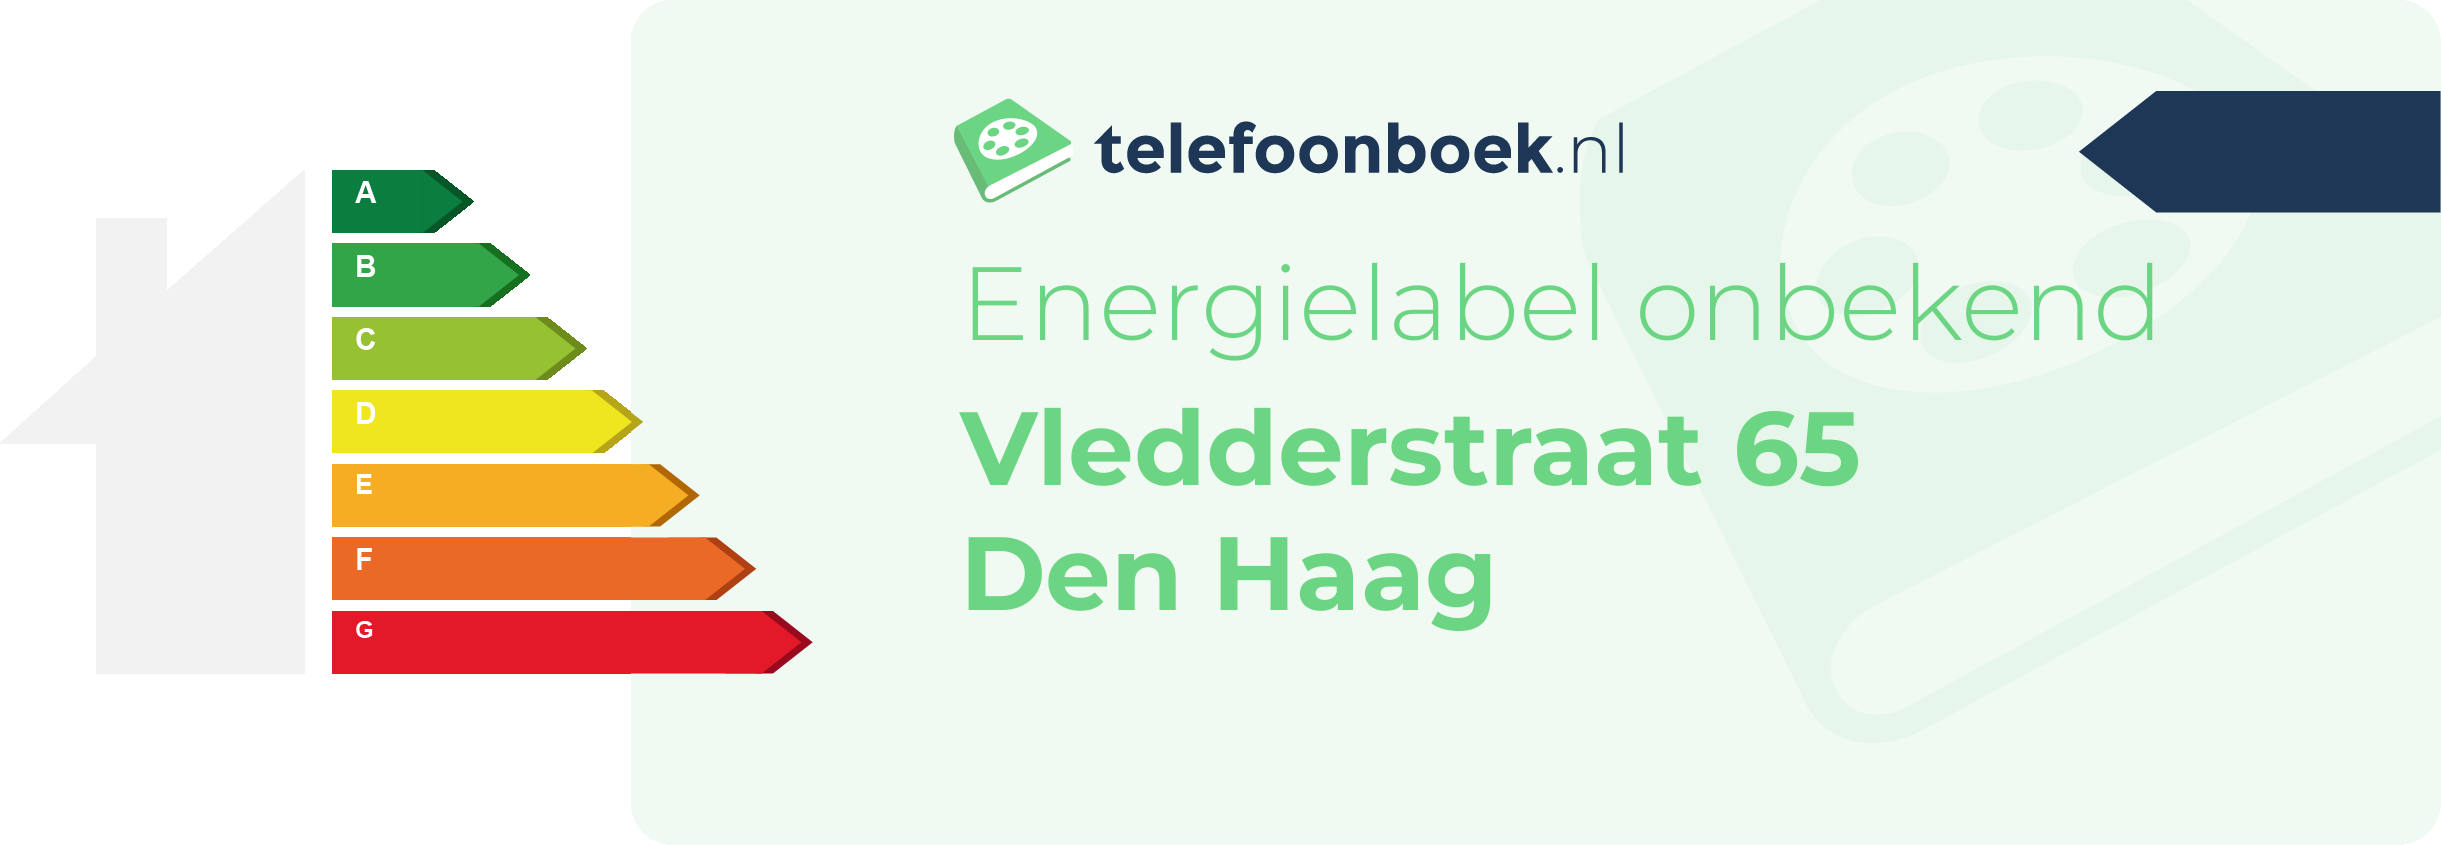 Energielabel Vledderstraat 65 Den Haag